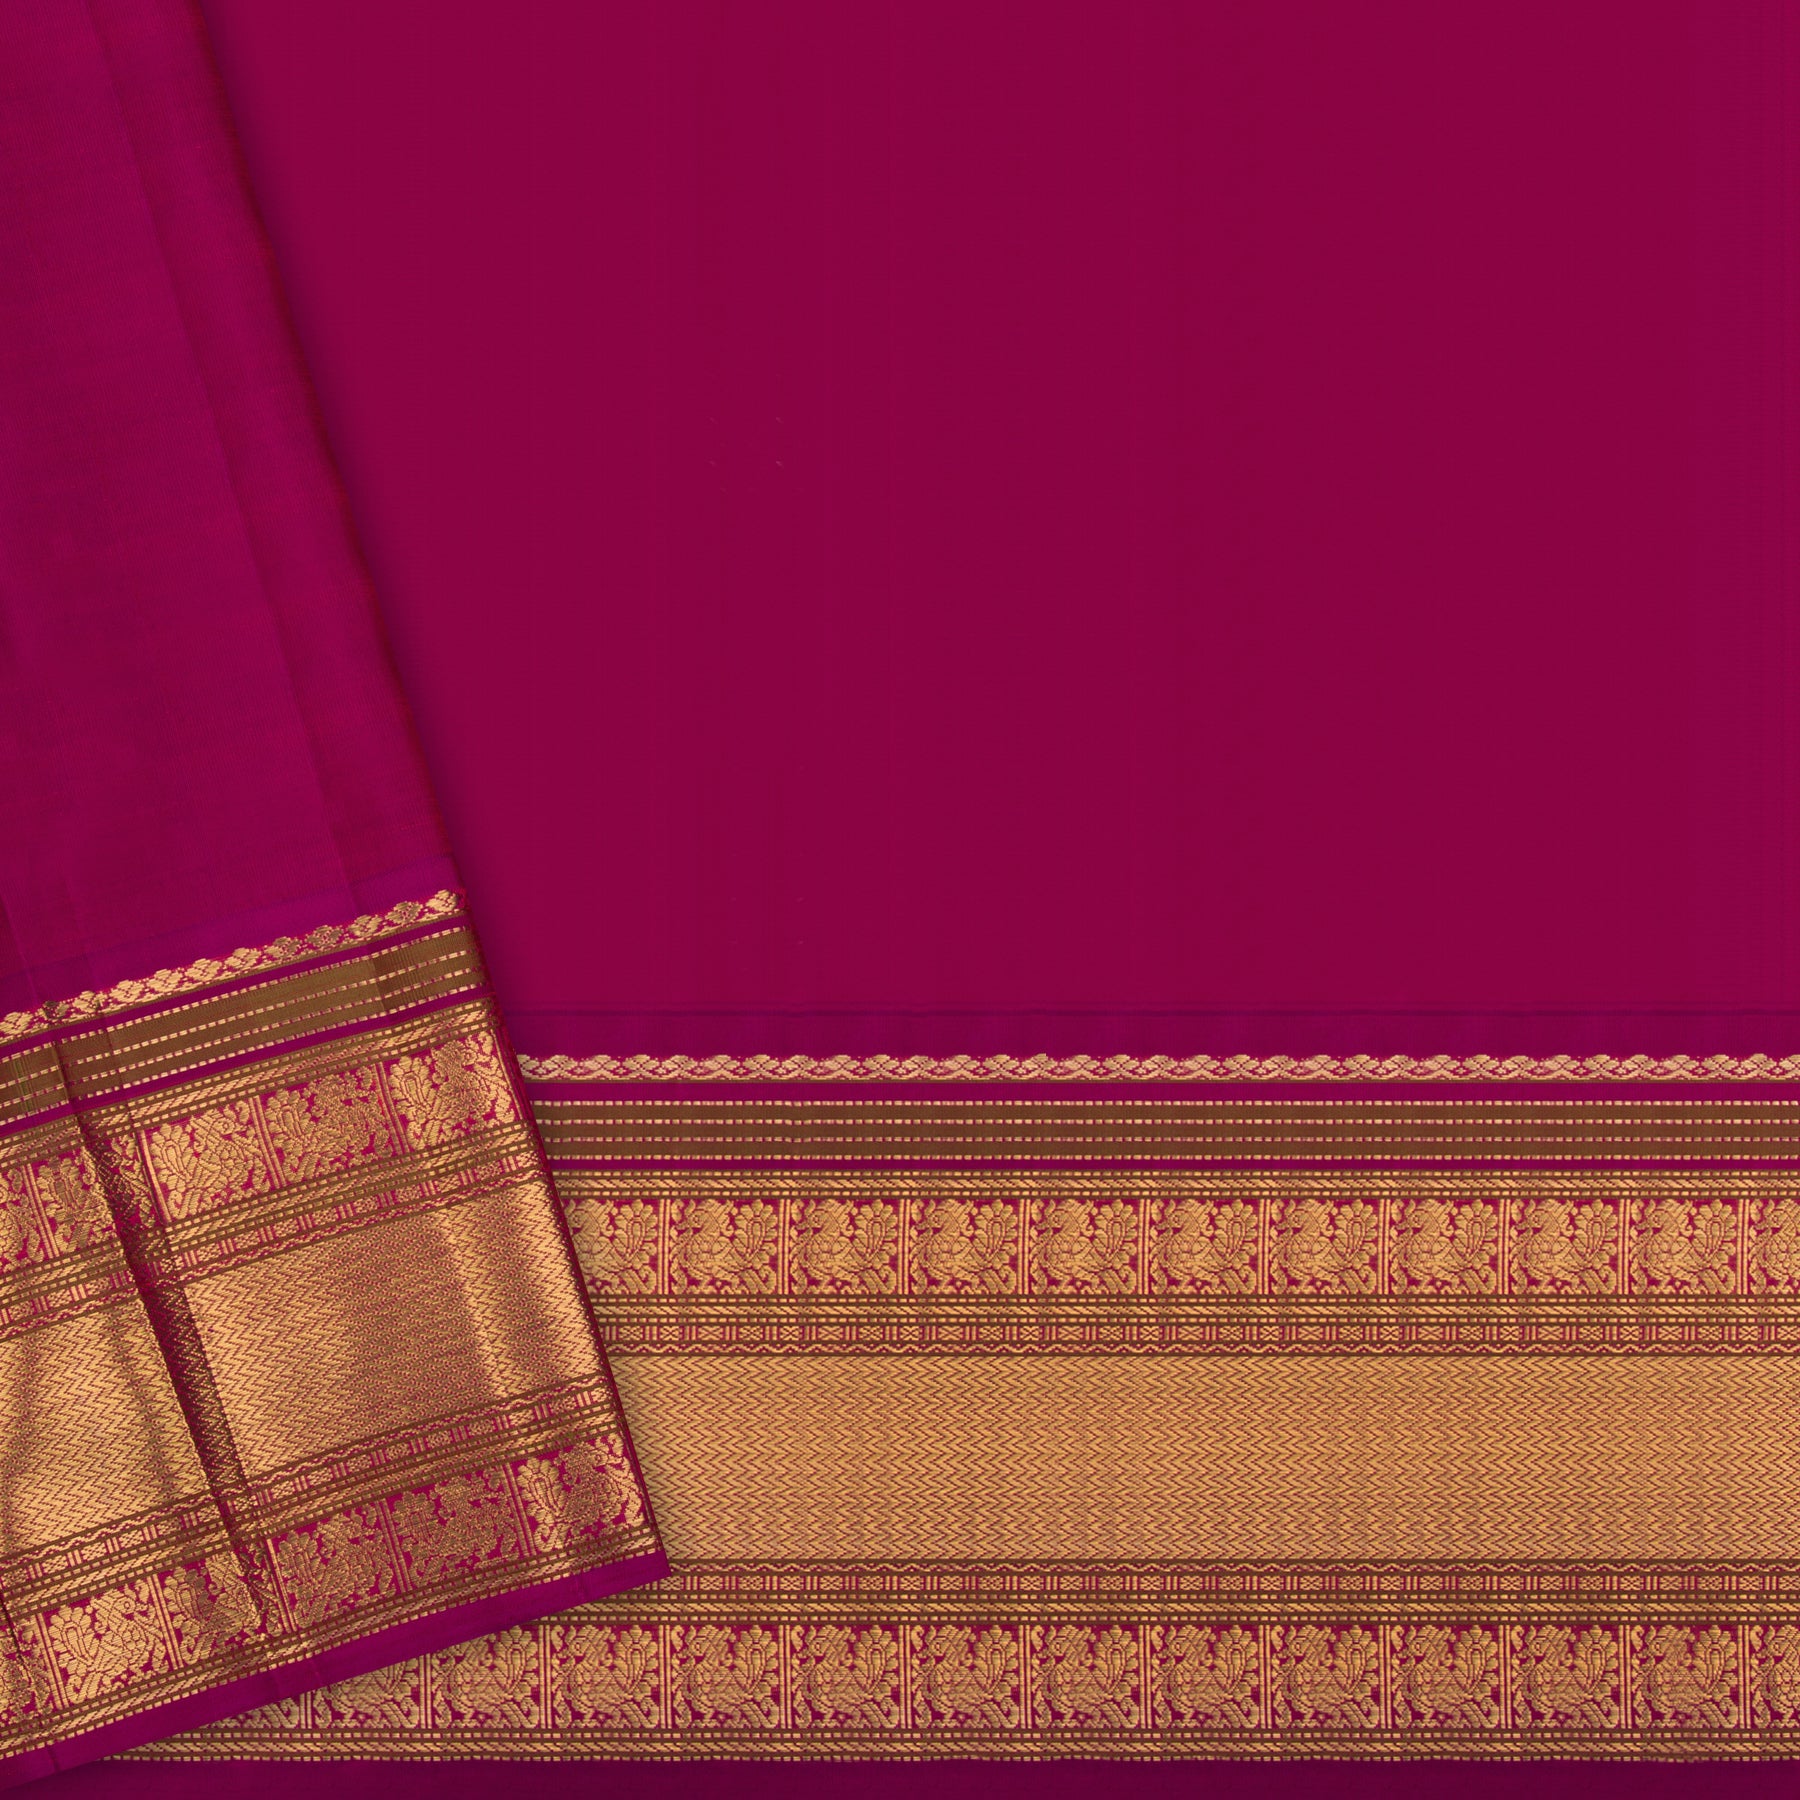 Kanakavalli Kanjivaram Silk Sari 23-041-HS001-04577 - Blouse View